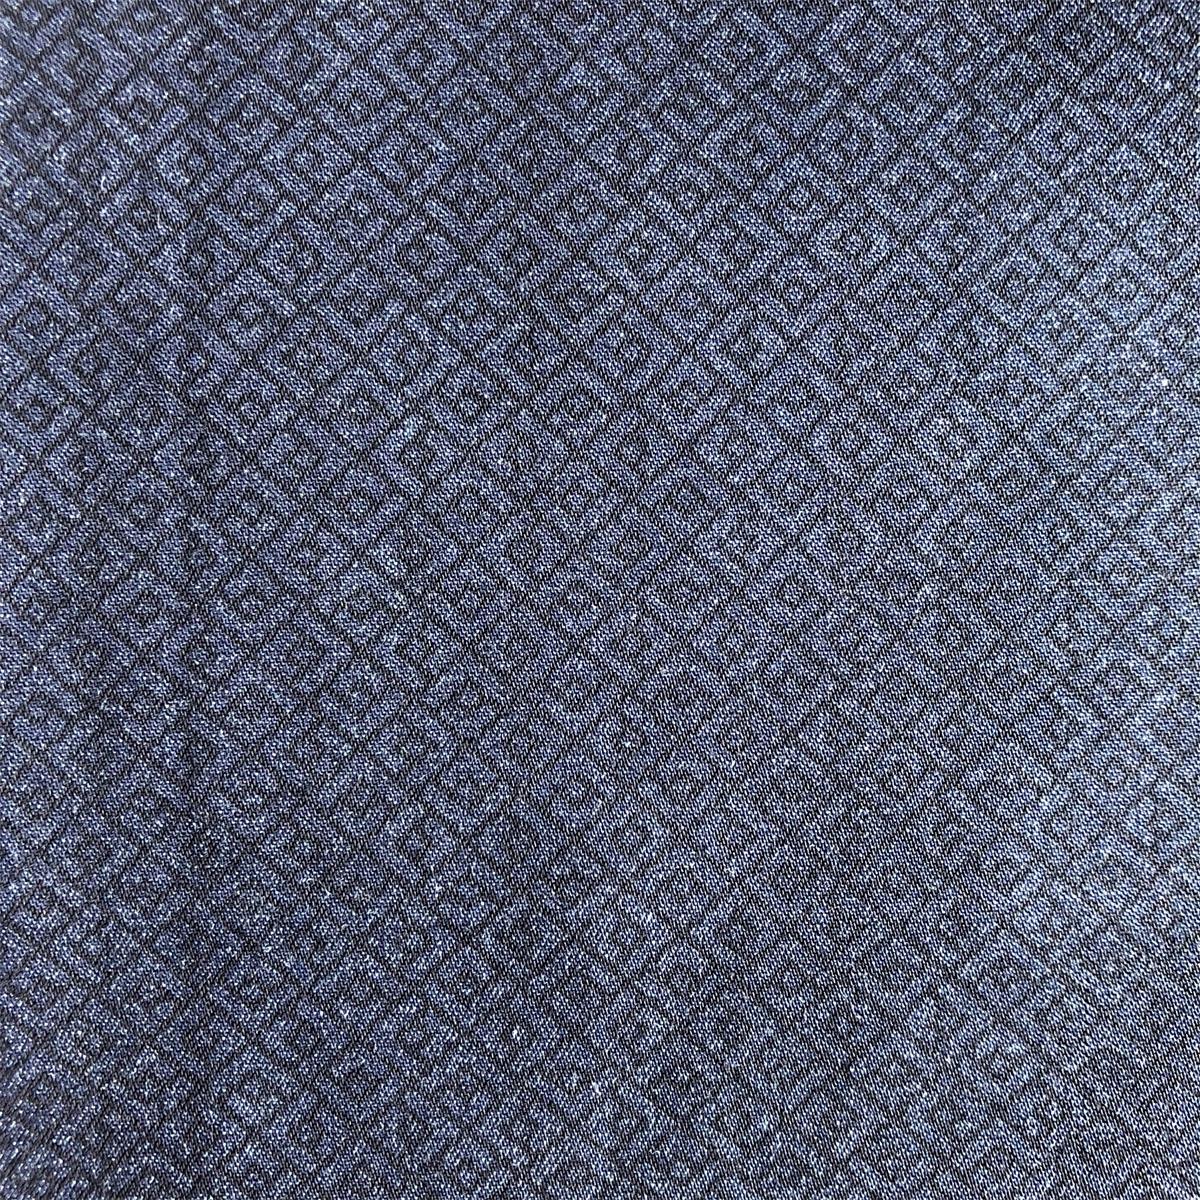 Cotton Denim Fabric by indigo yarn for men's shirts 100% cotton twill denim printed dark blue background shirts woven fabric